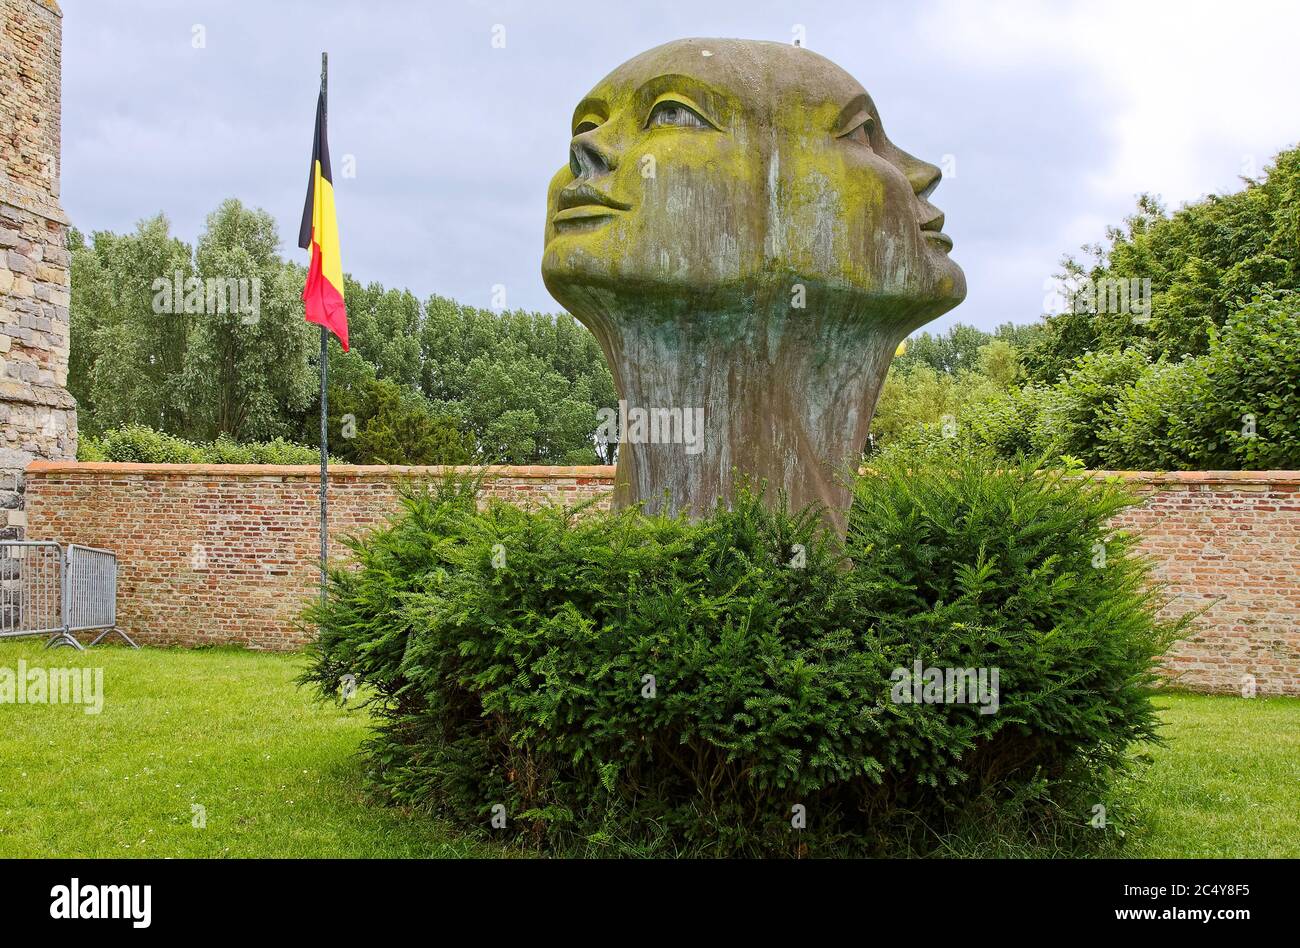 Look of Light, 2-headed statue, Blik van Licht, sculptor Charles Delporte, public art, outdoors, vegetation, Belgian flag, brick wall, Europe, Damme; Stock Photo